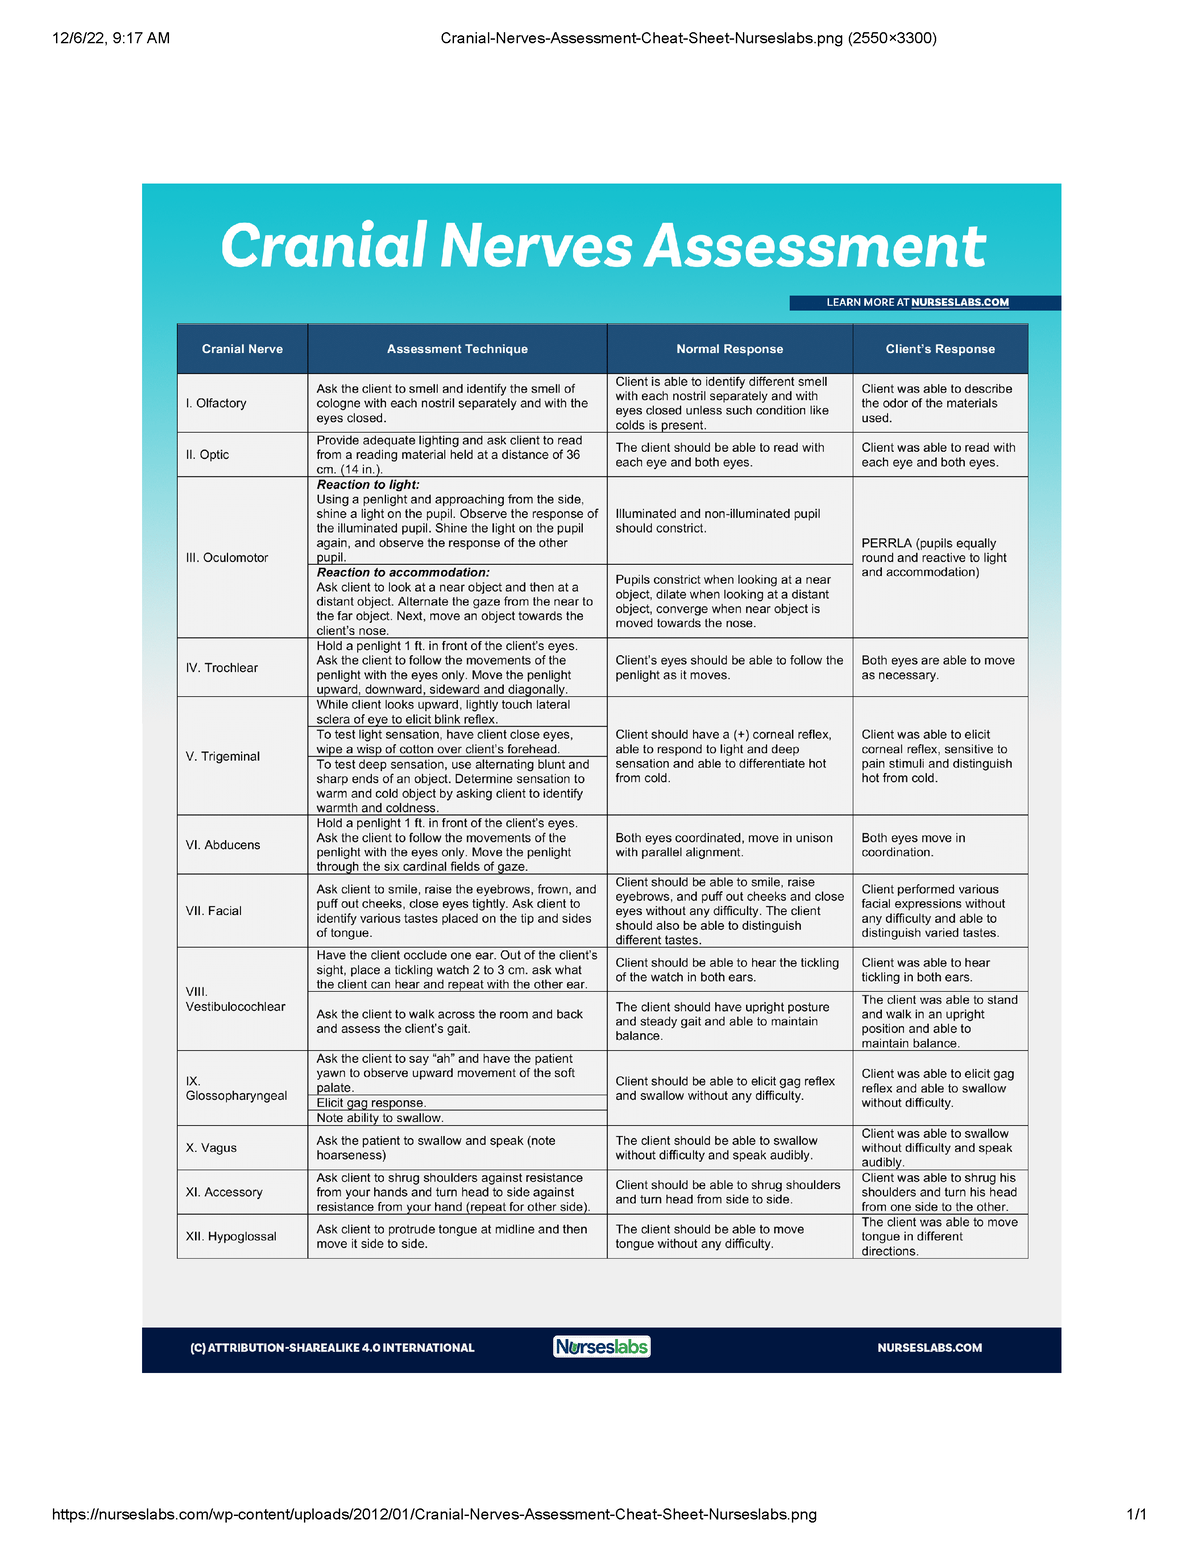 cranial nerves cheat sheet